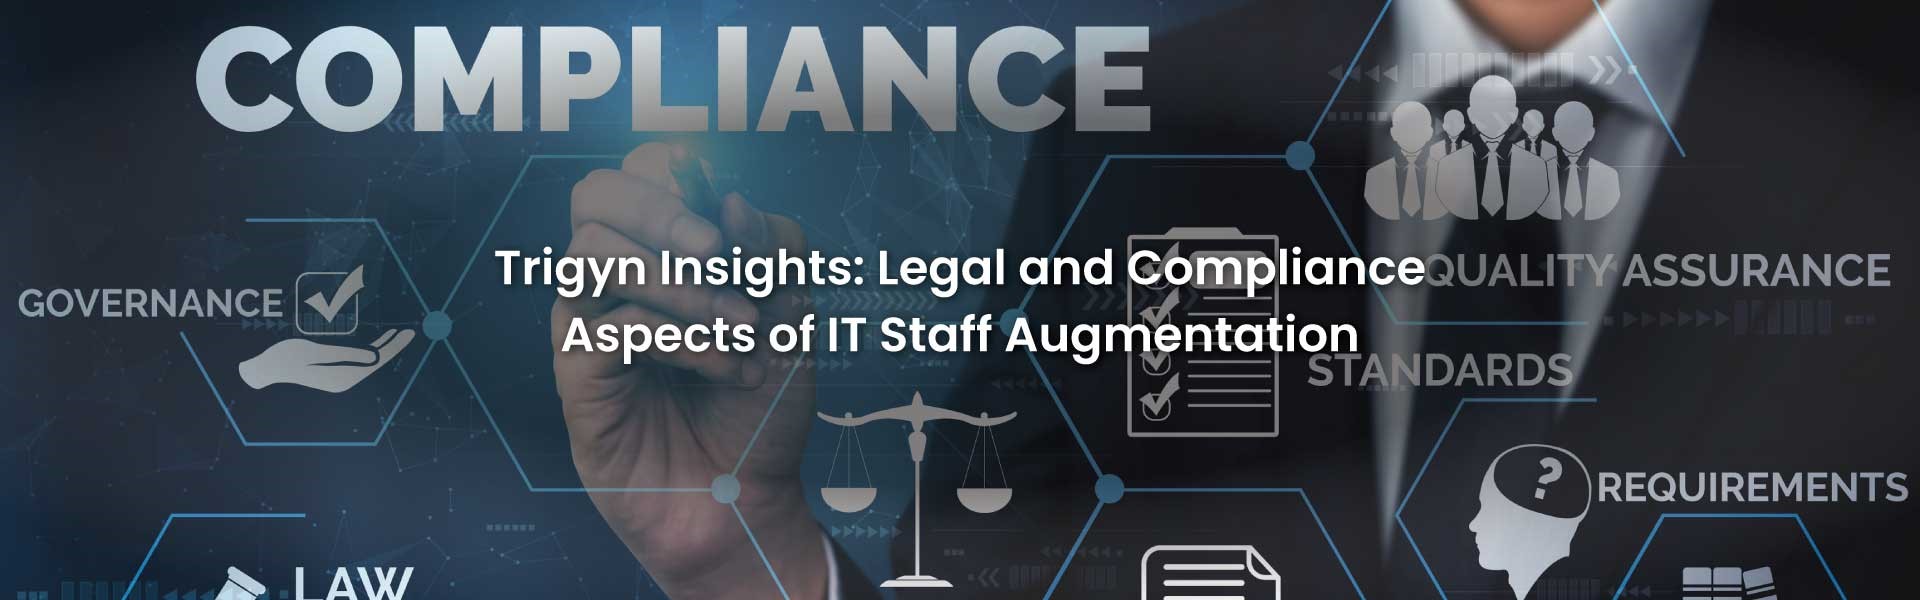 Legal Aspects of IT Staff Augmentation